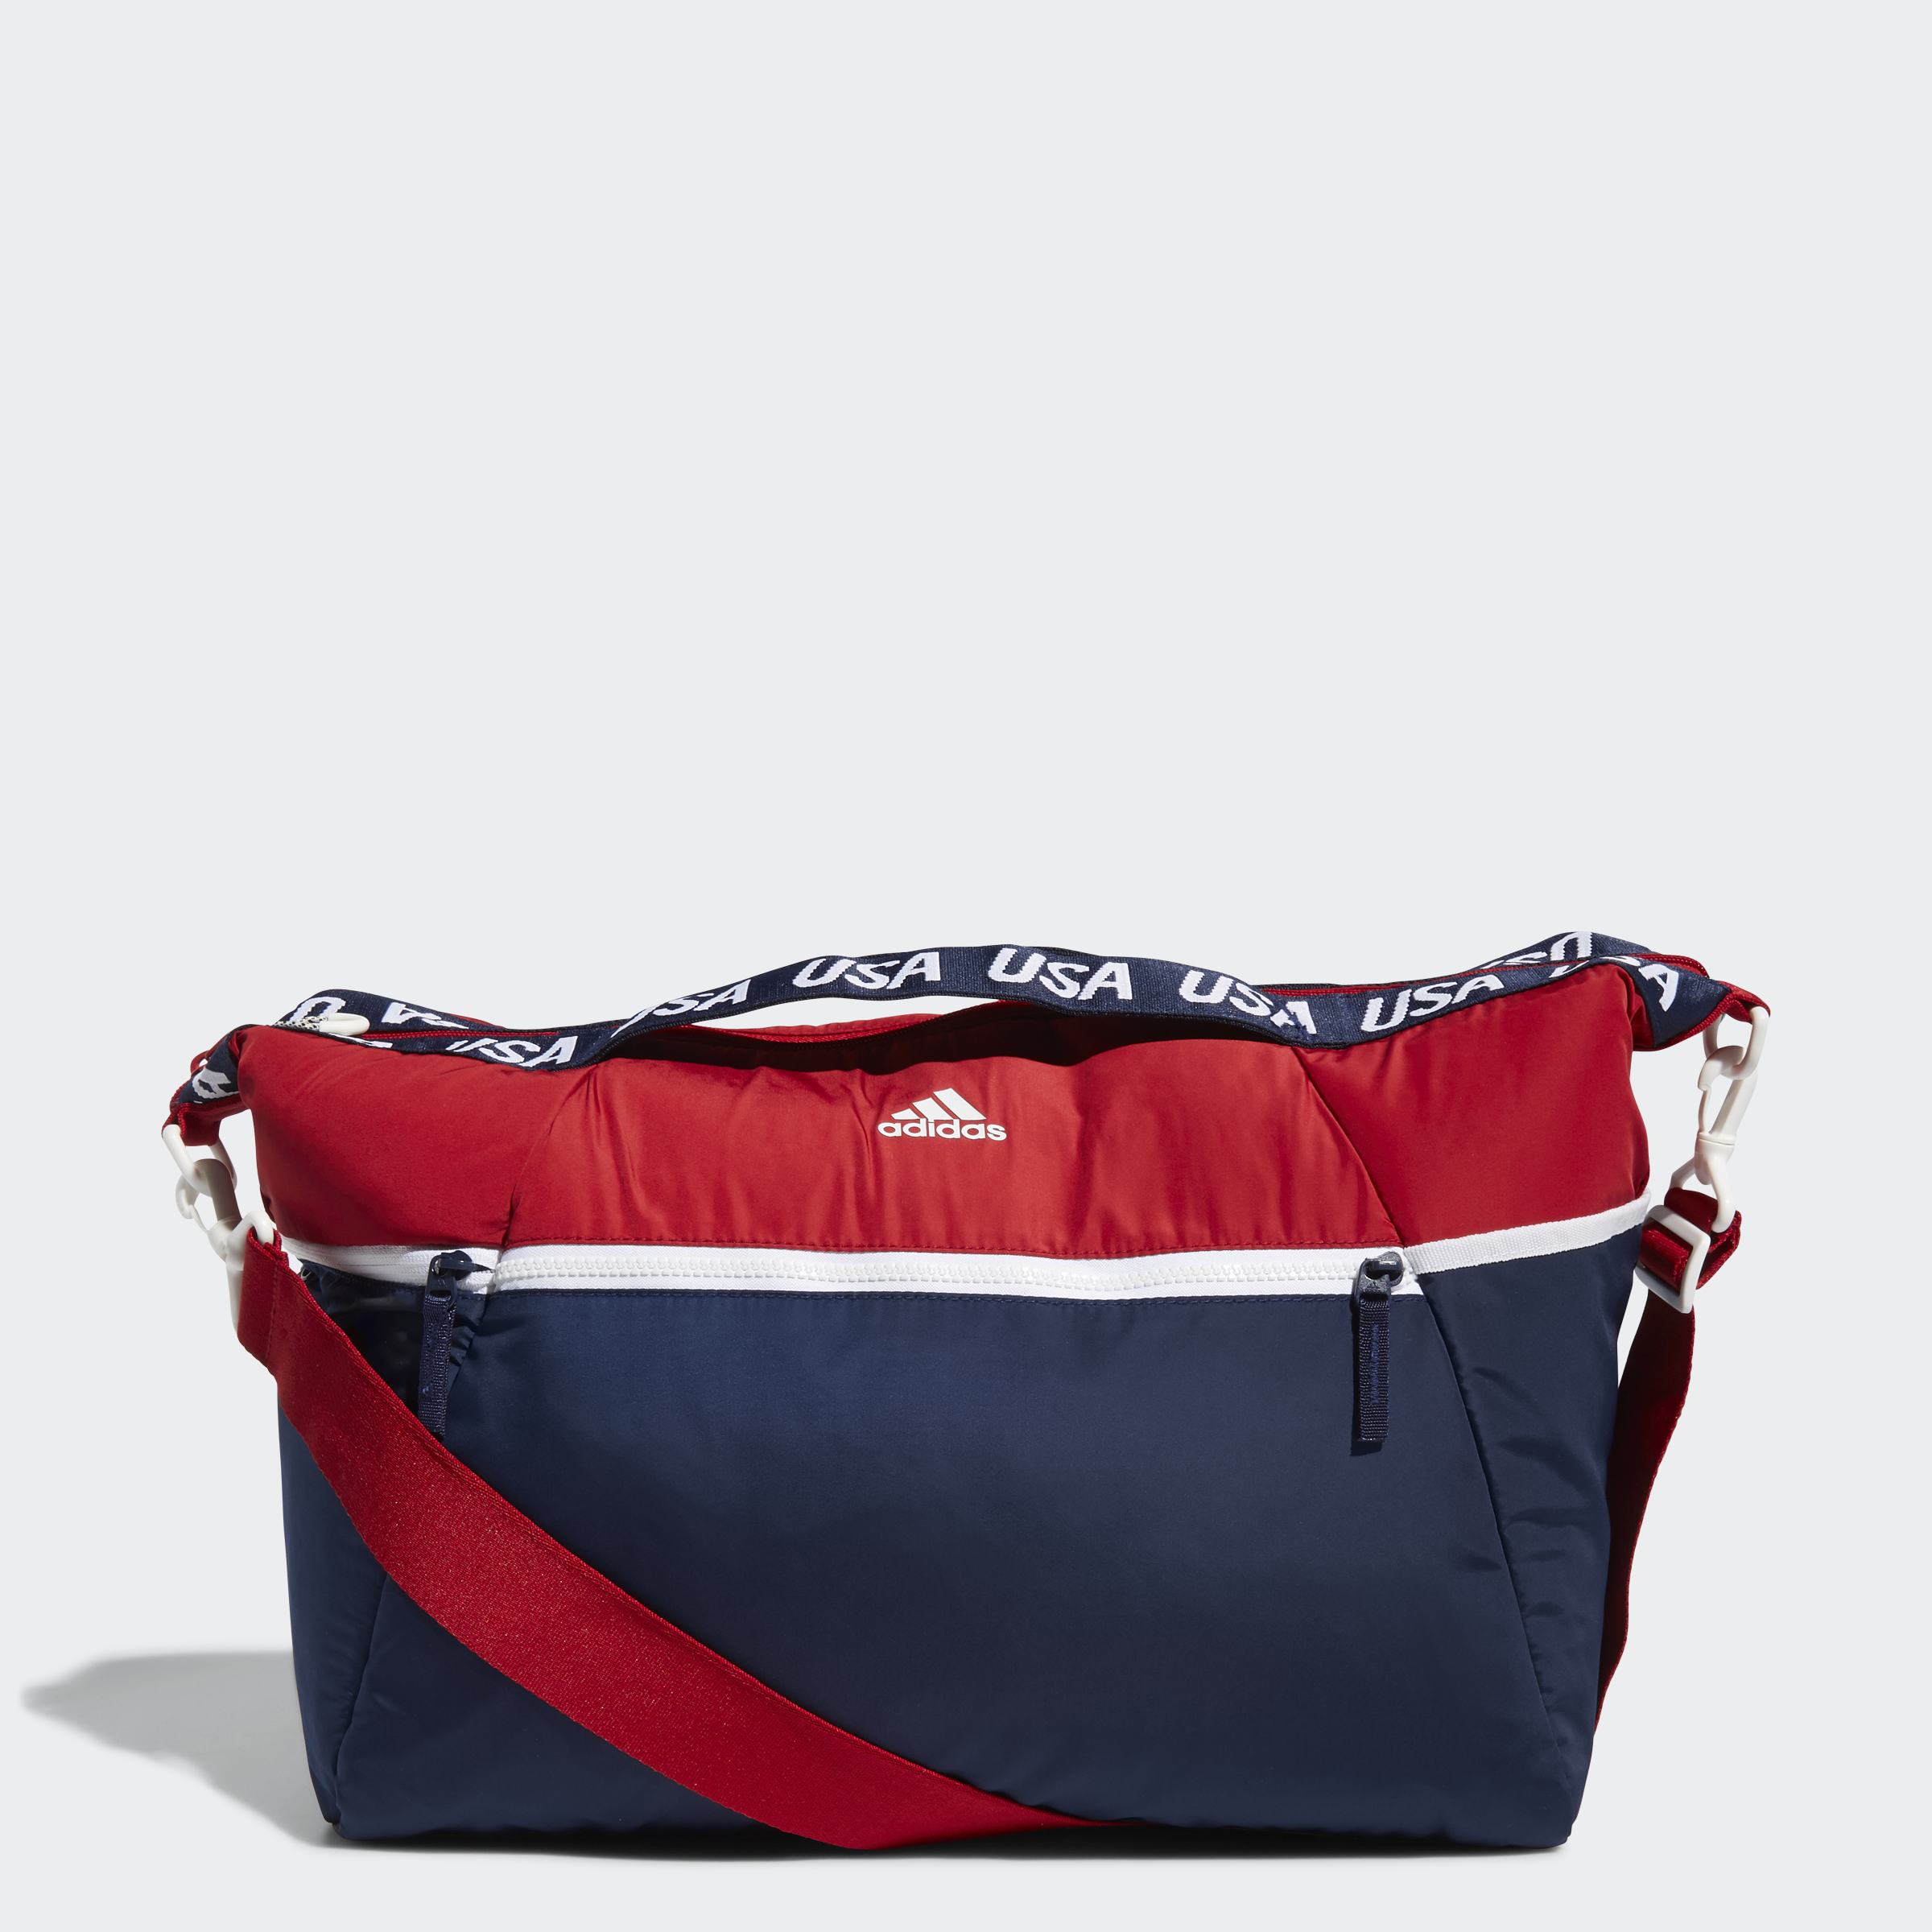 adidas USA Volleyball Studio 3 Duffel Bag Women's | eBay